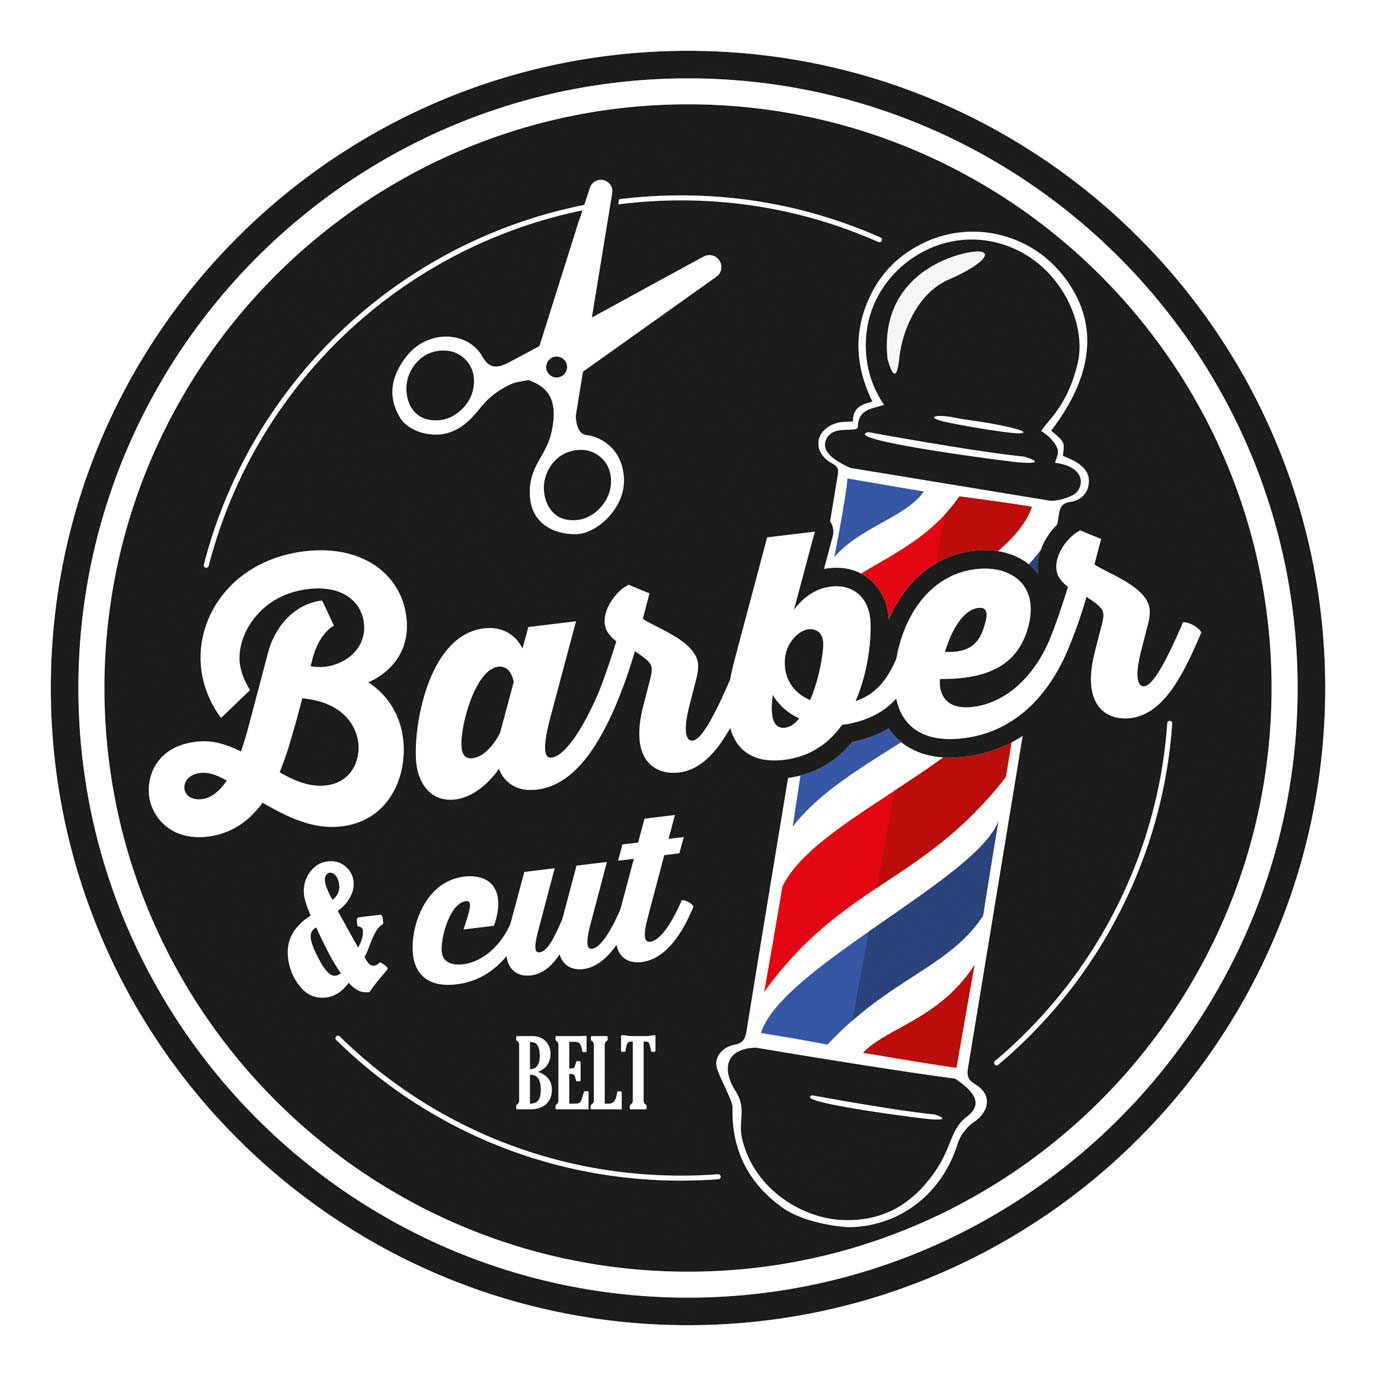 Smoby Barber & Cut Kappersriem, 10dlg.